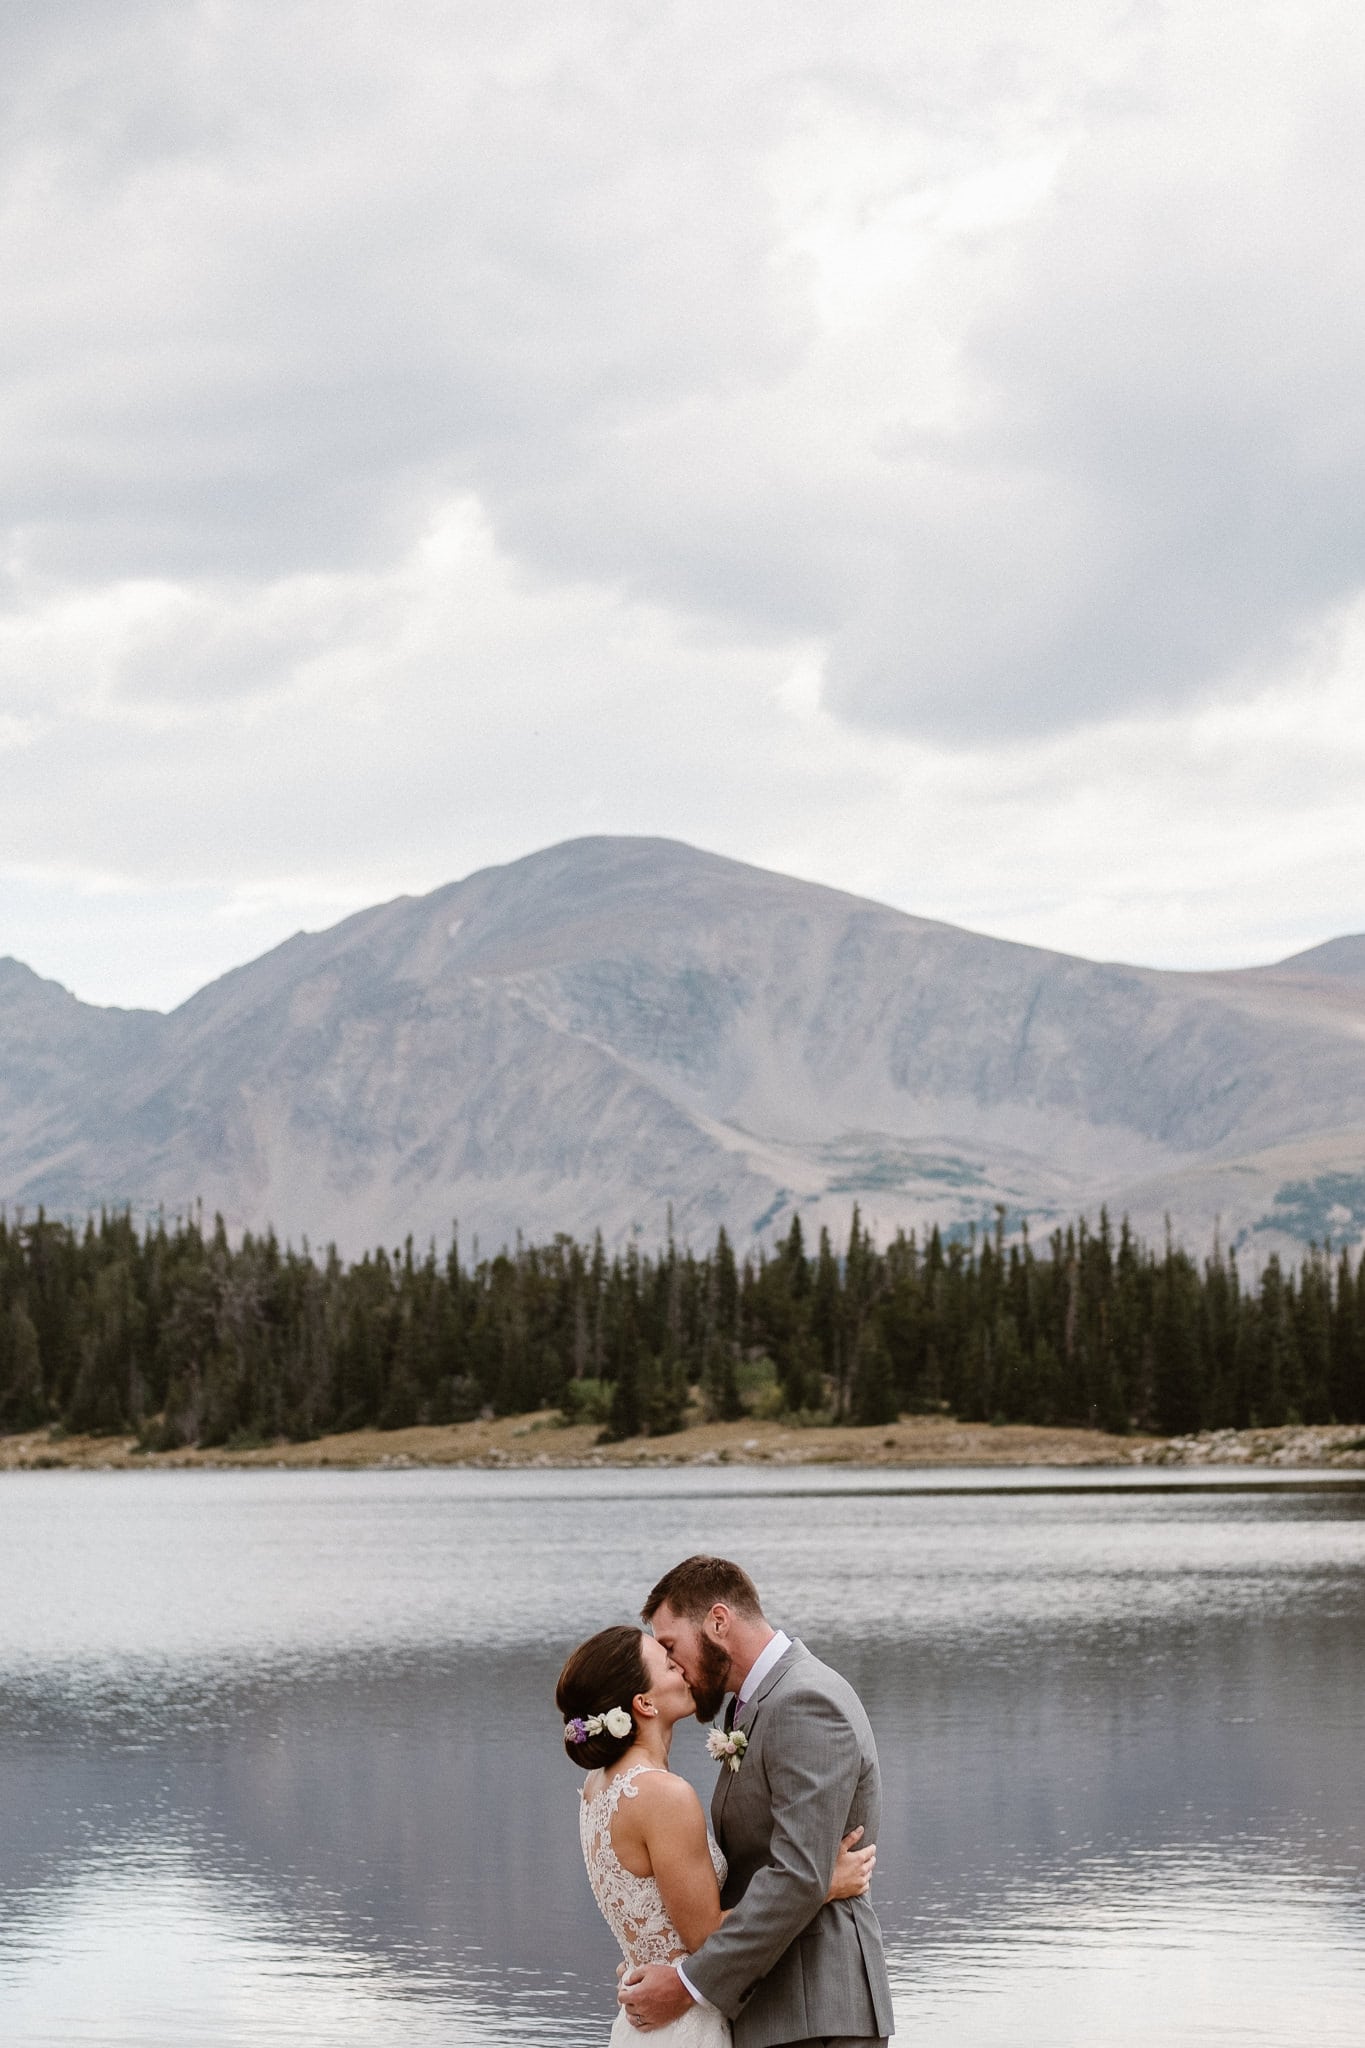 Colorado mountain elopement photographer, alpine lake adventure wedding, Boulder wedding photographer, outdoor ceremony, first kiss